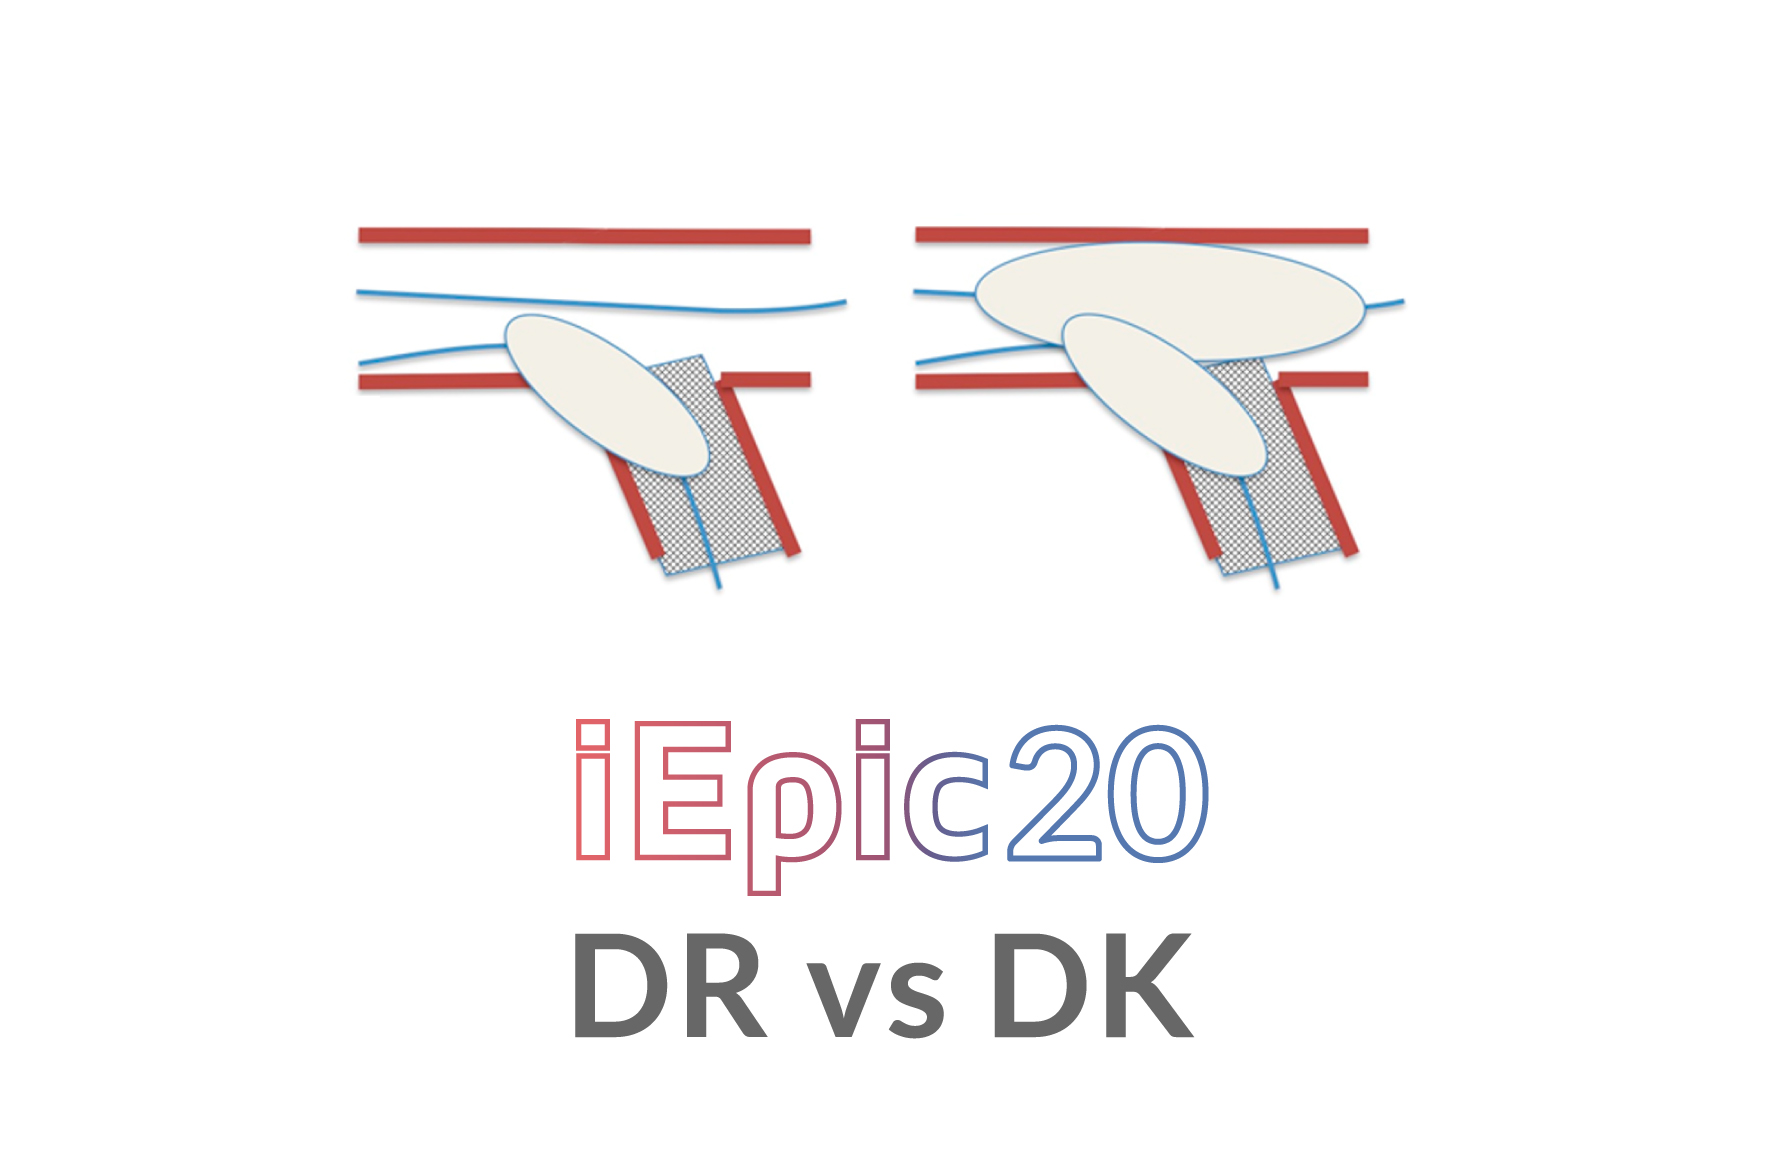 DR vs DK